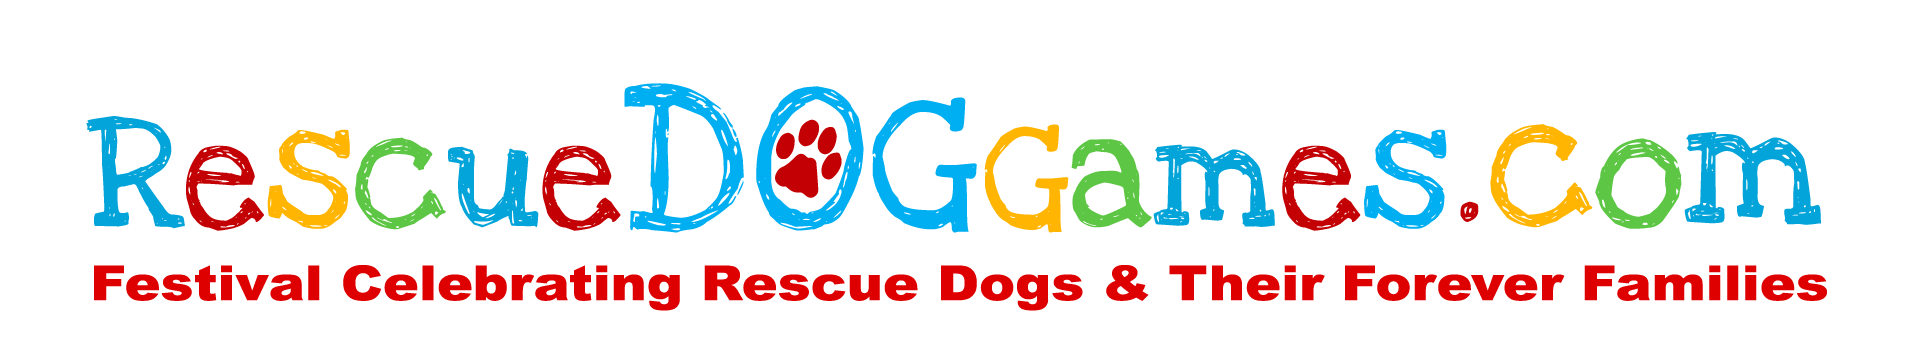 Rescue Dog Olympics Logo